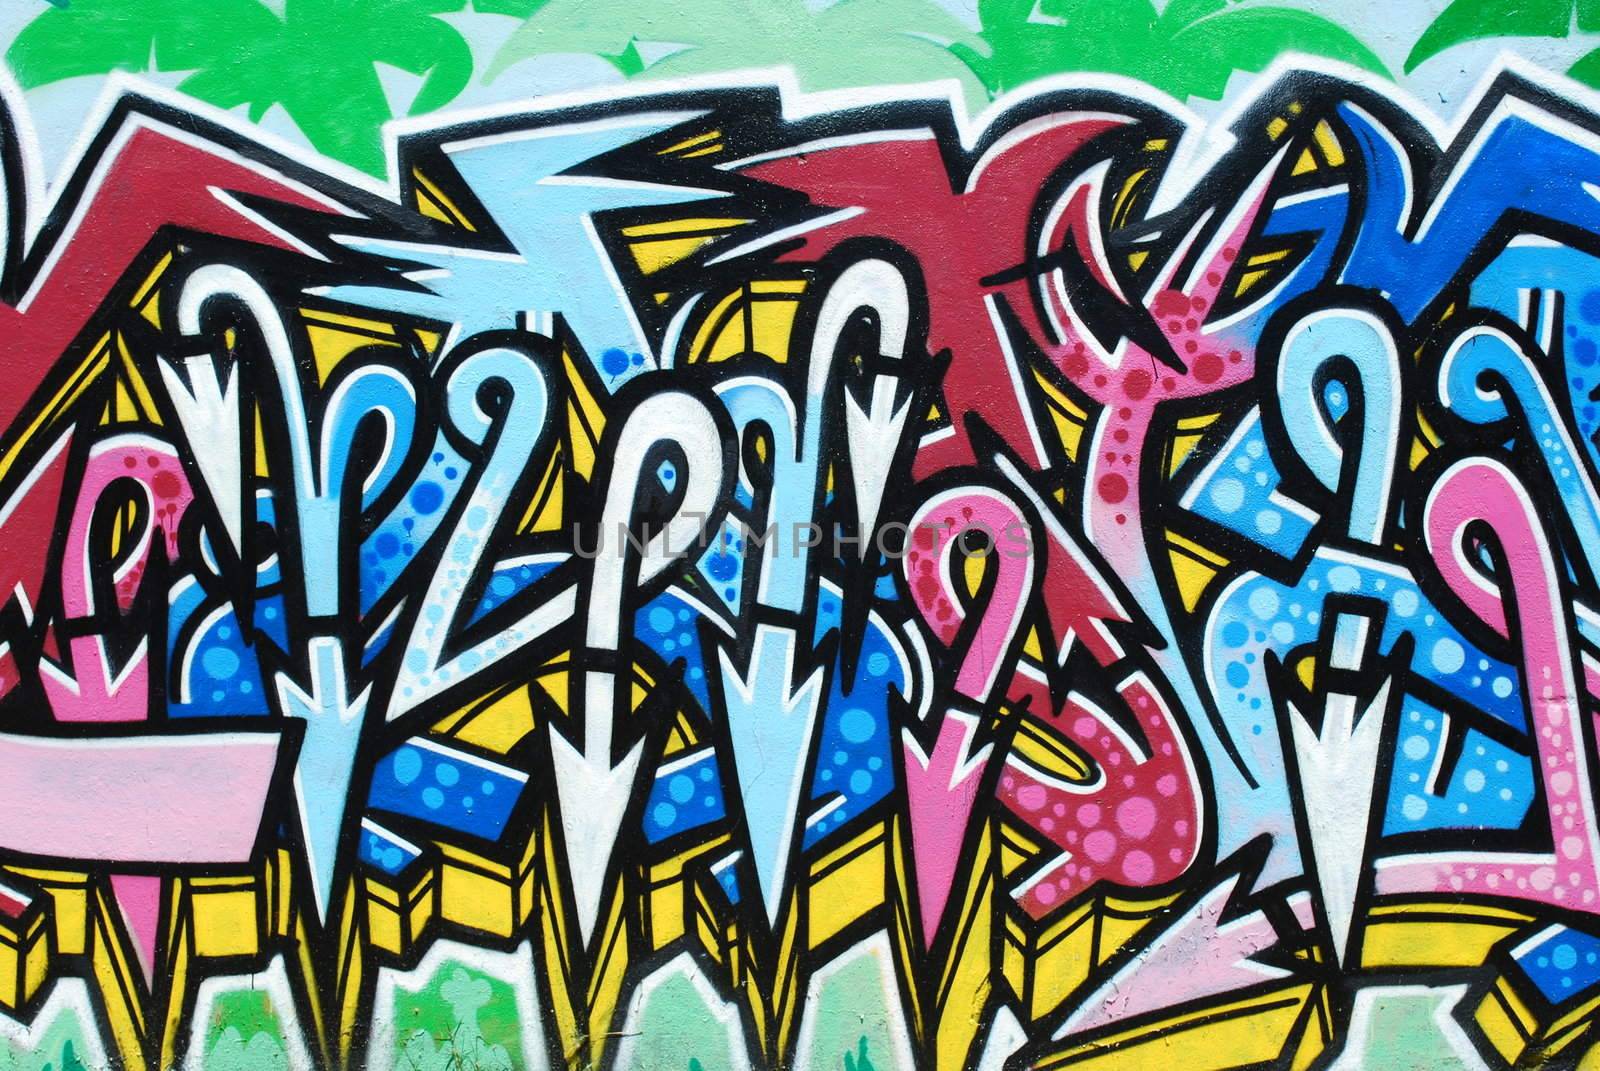 Graffiti Wall by luissantos84